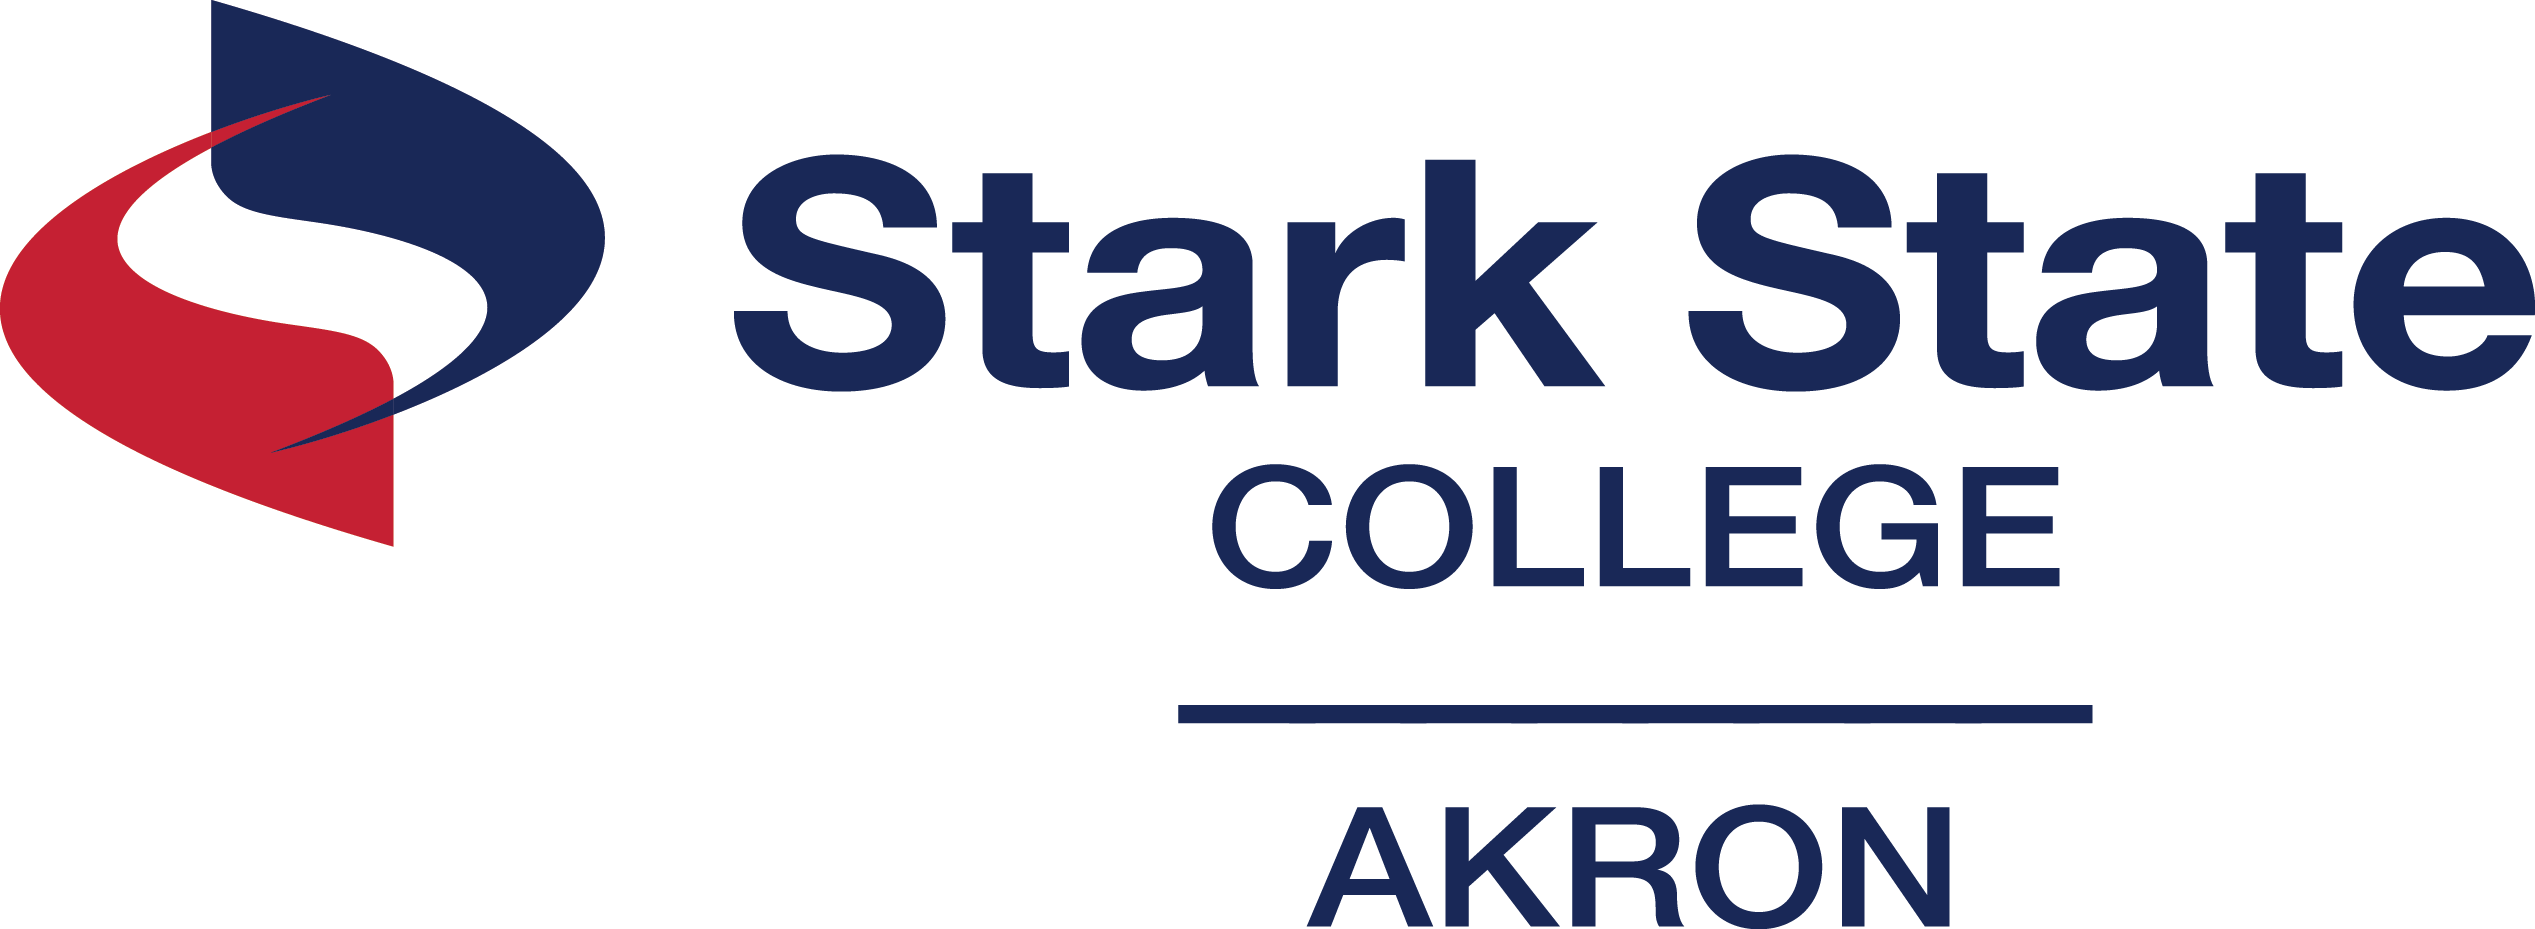 Stark State College - Akron Logo